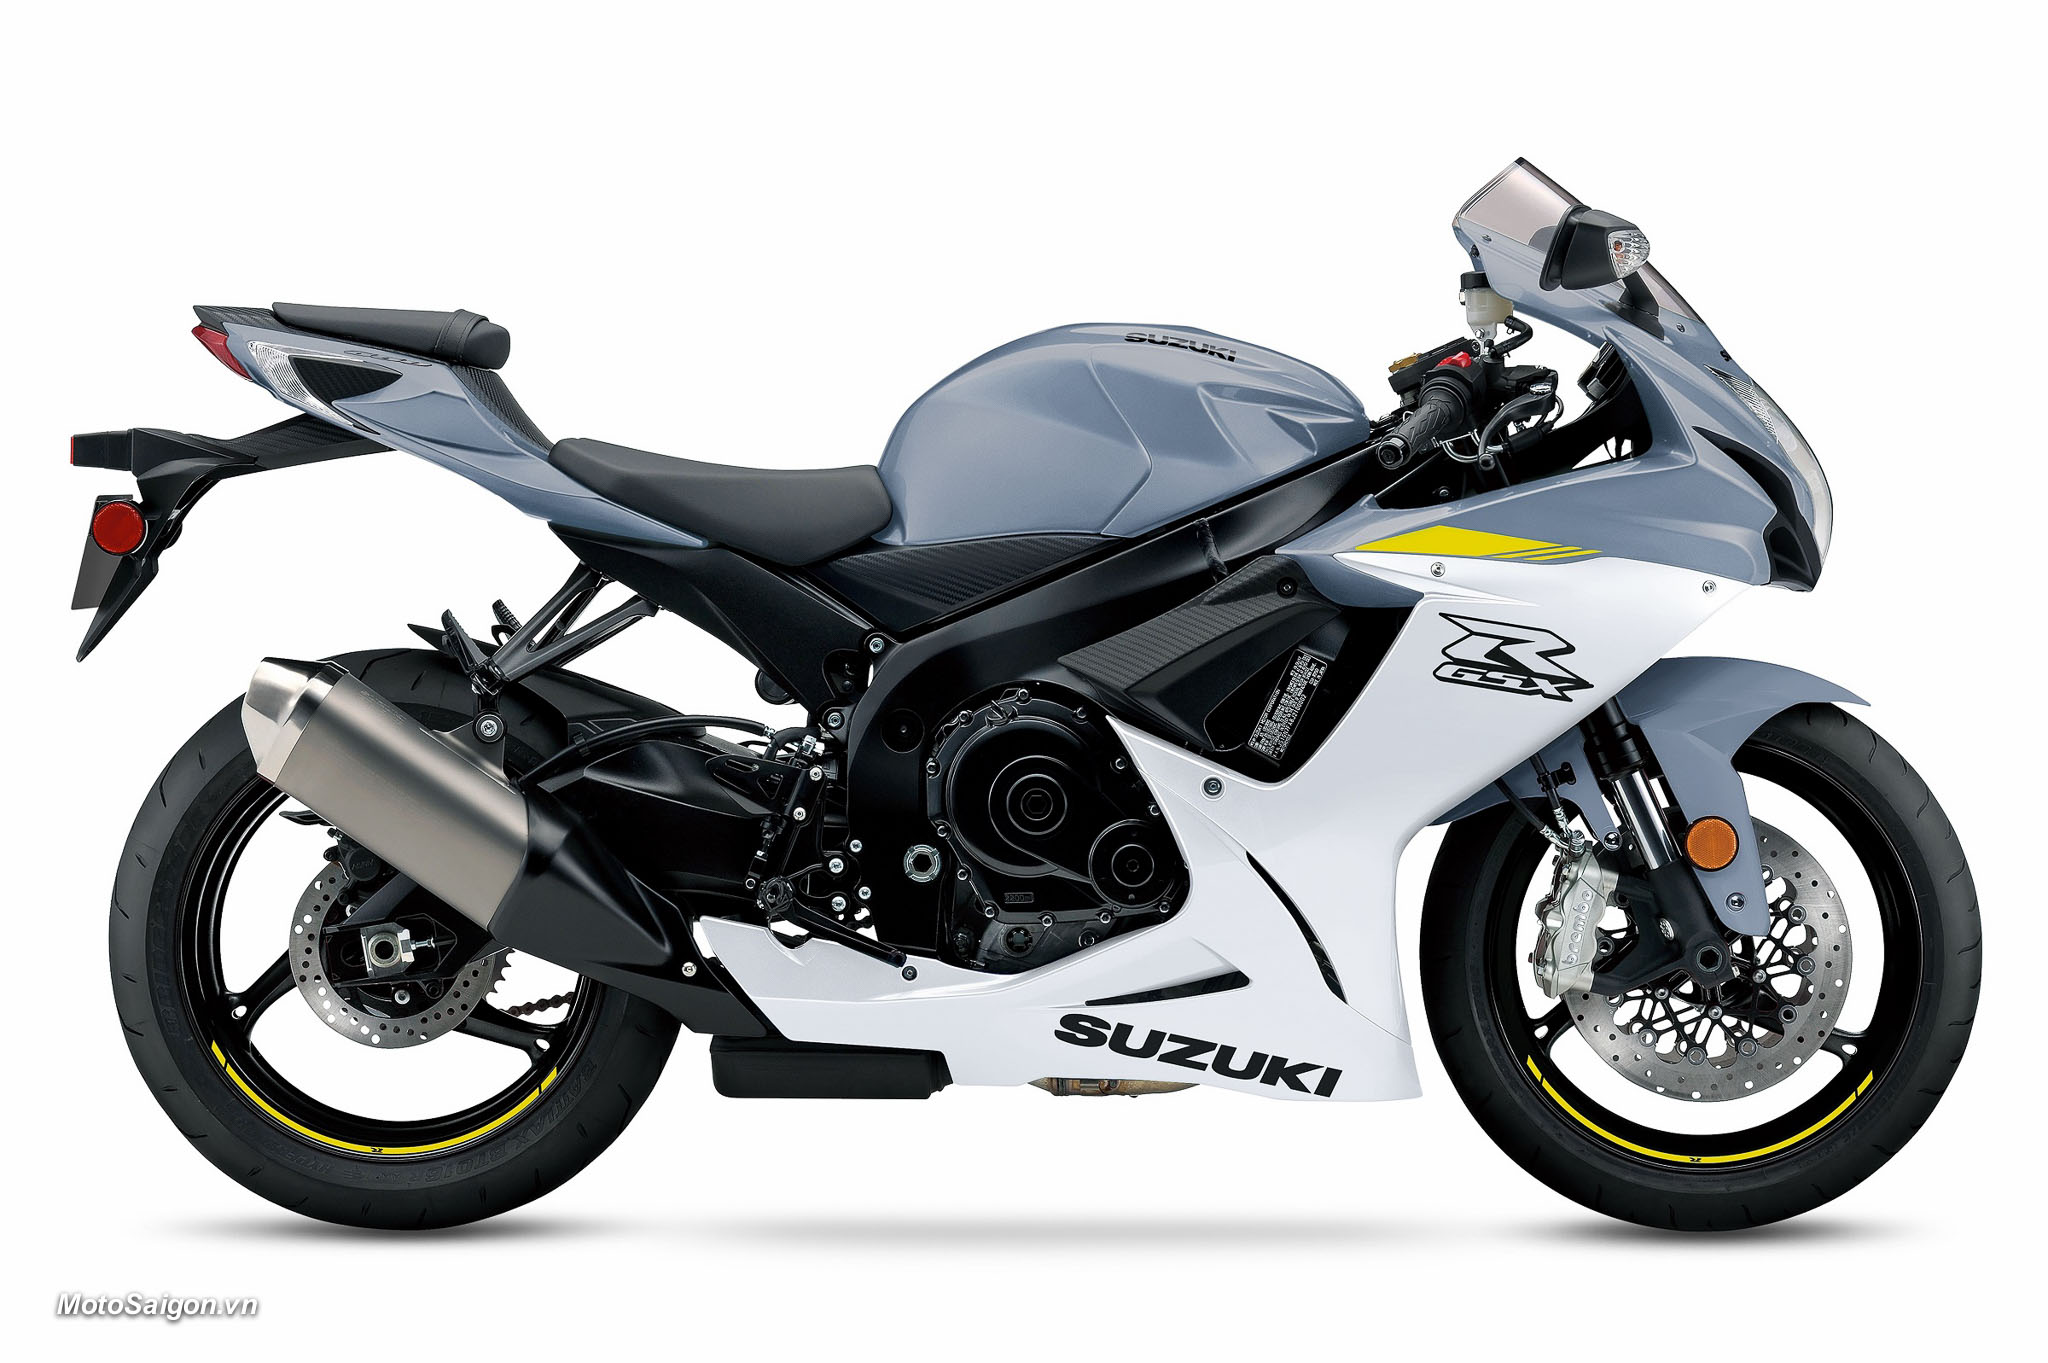 Sport bike Suzuki GSXR600 2021 ra mắt với thiết kế 10 năm không lỗi thời